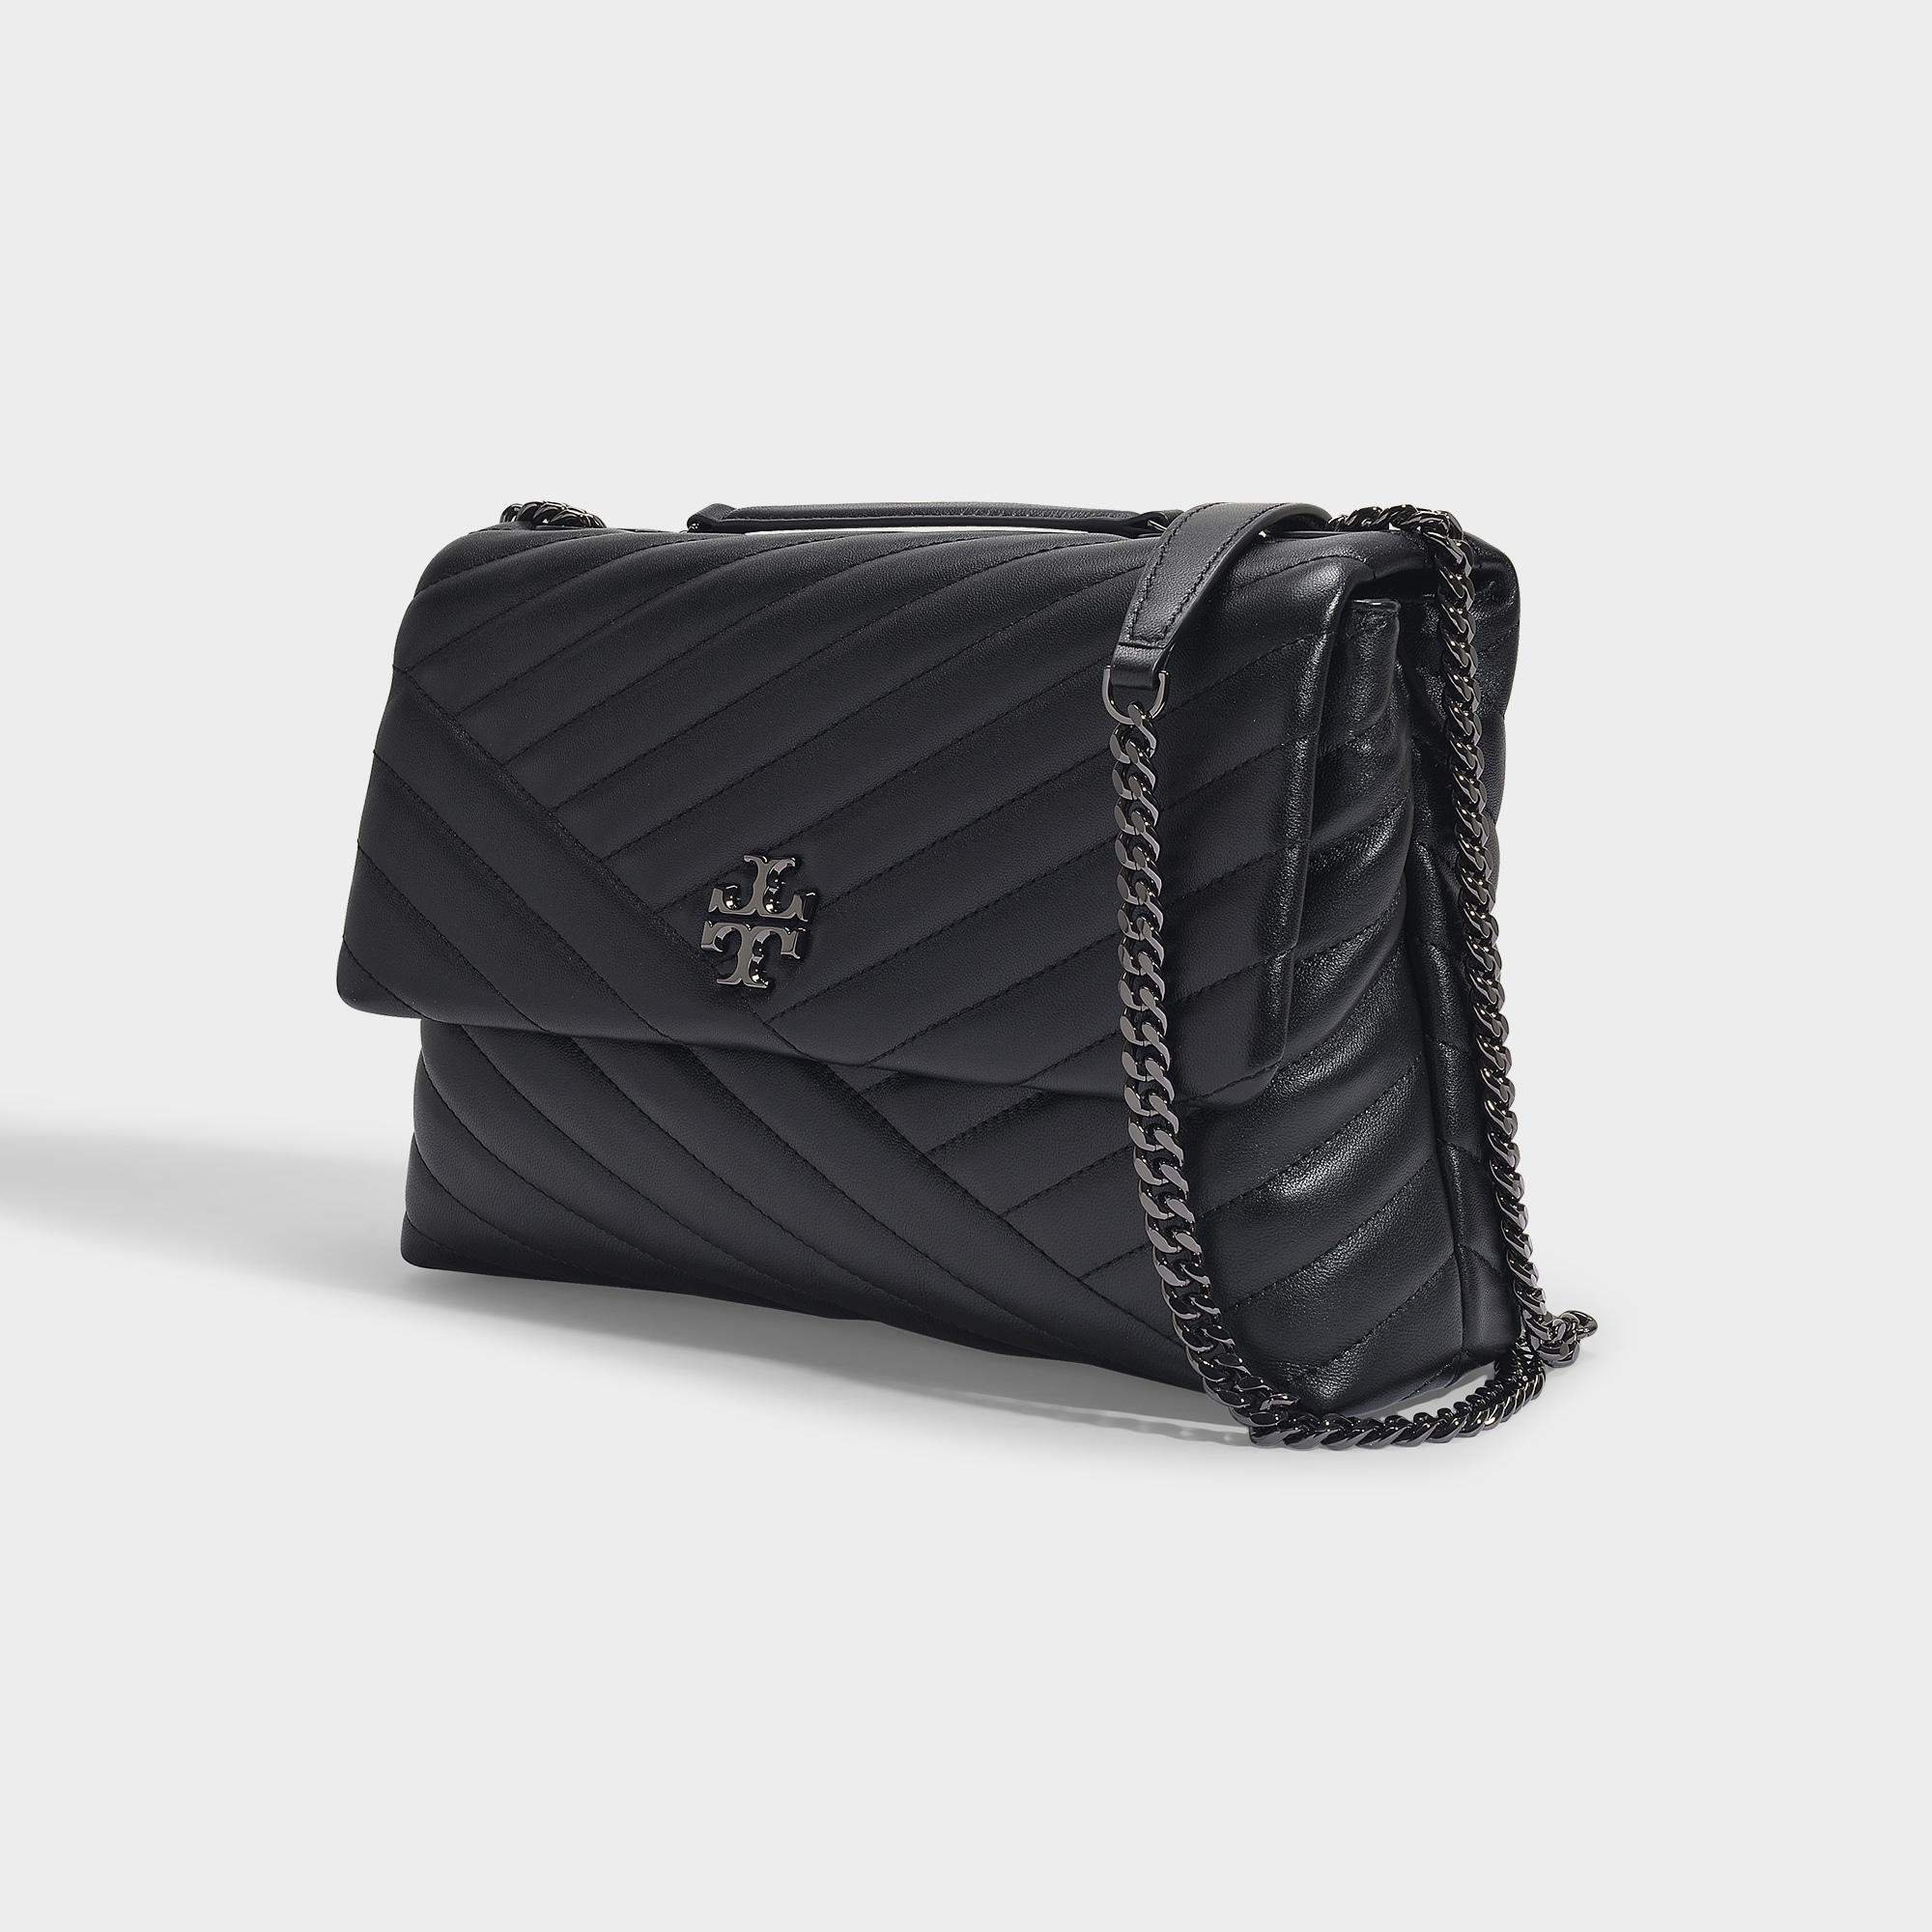 Tory Burch Leather Kira Chevron Convertible Shoulder Bag In Black Calfskin - Lyst